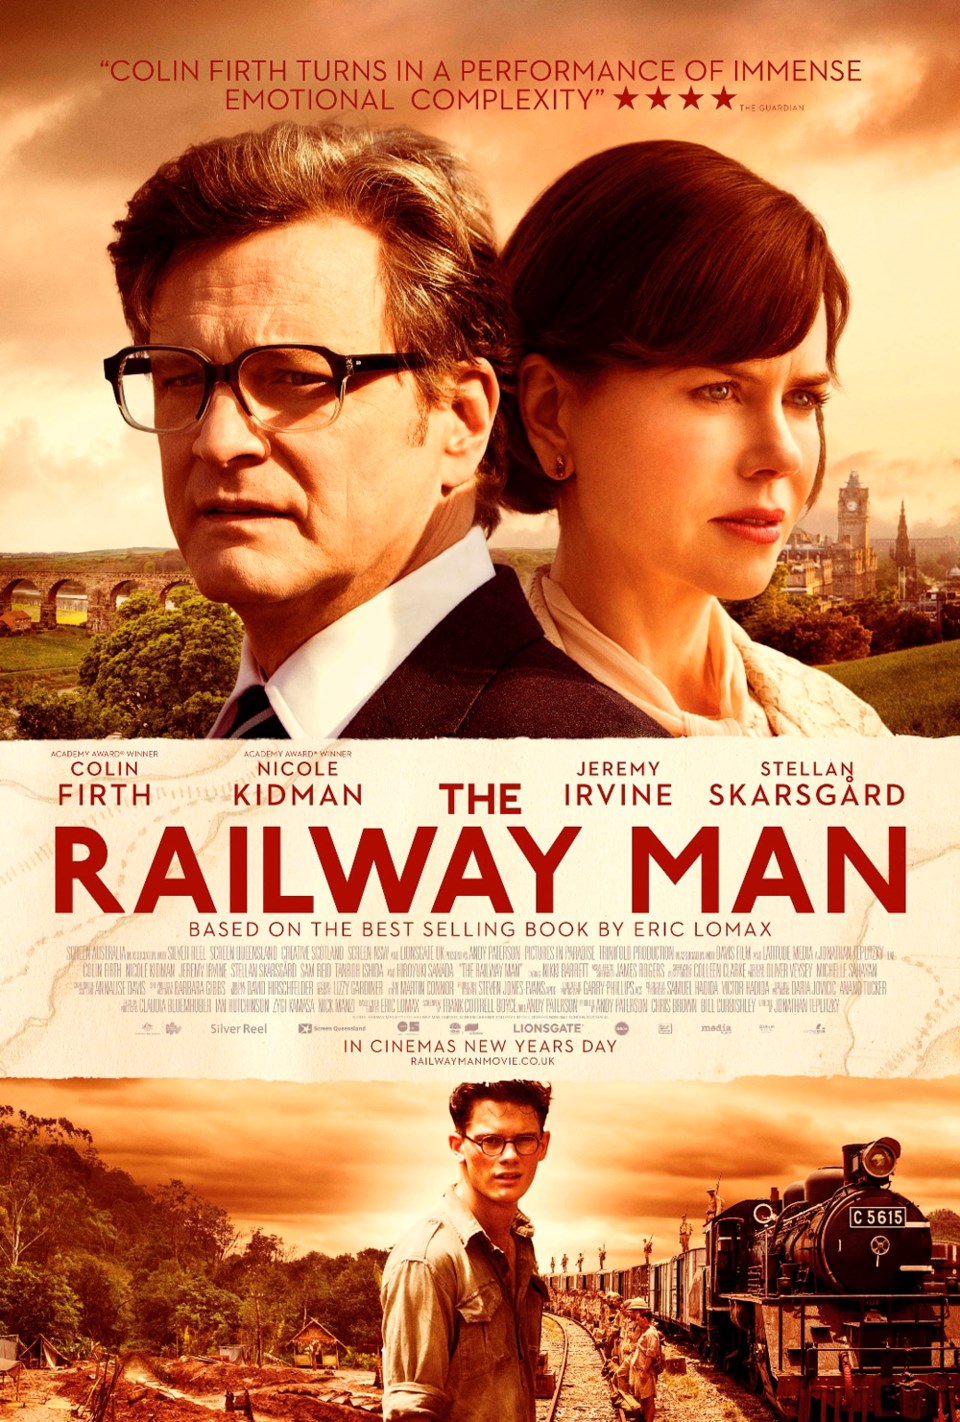 the Railway Man, poster